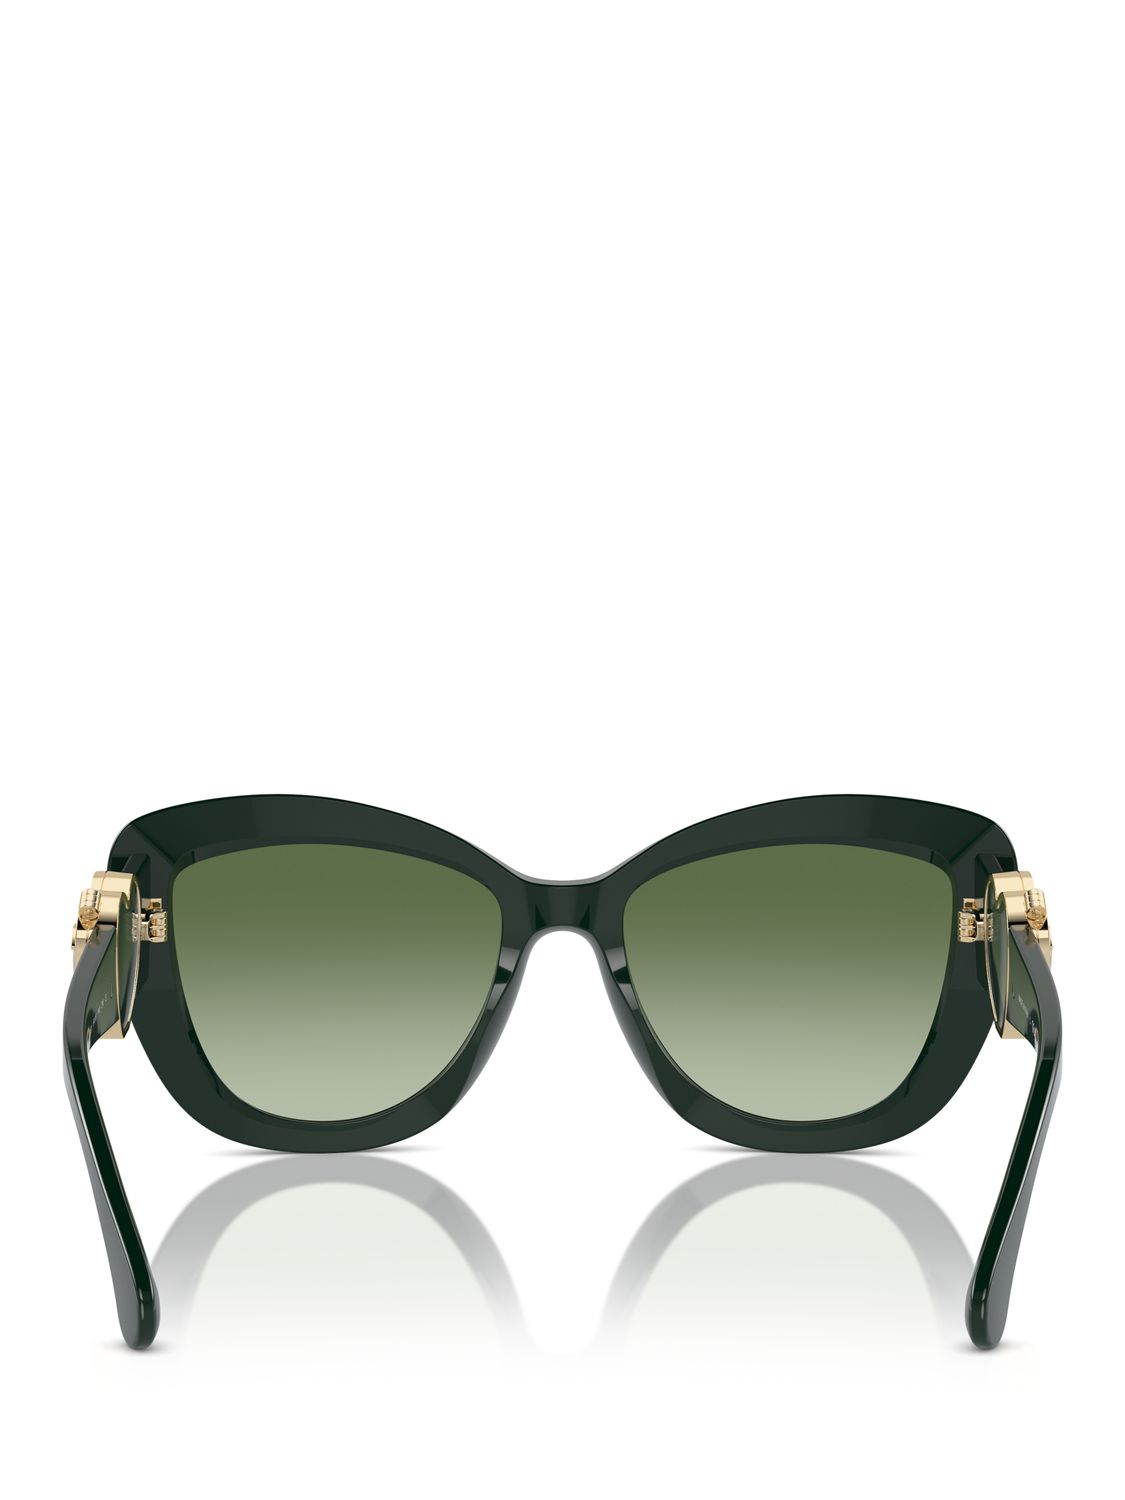 Buy CHANEL Cat Eye Sunglasses CH5517 Green Vendome/Green Gradient Online at johnlewis.com